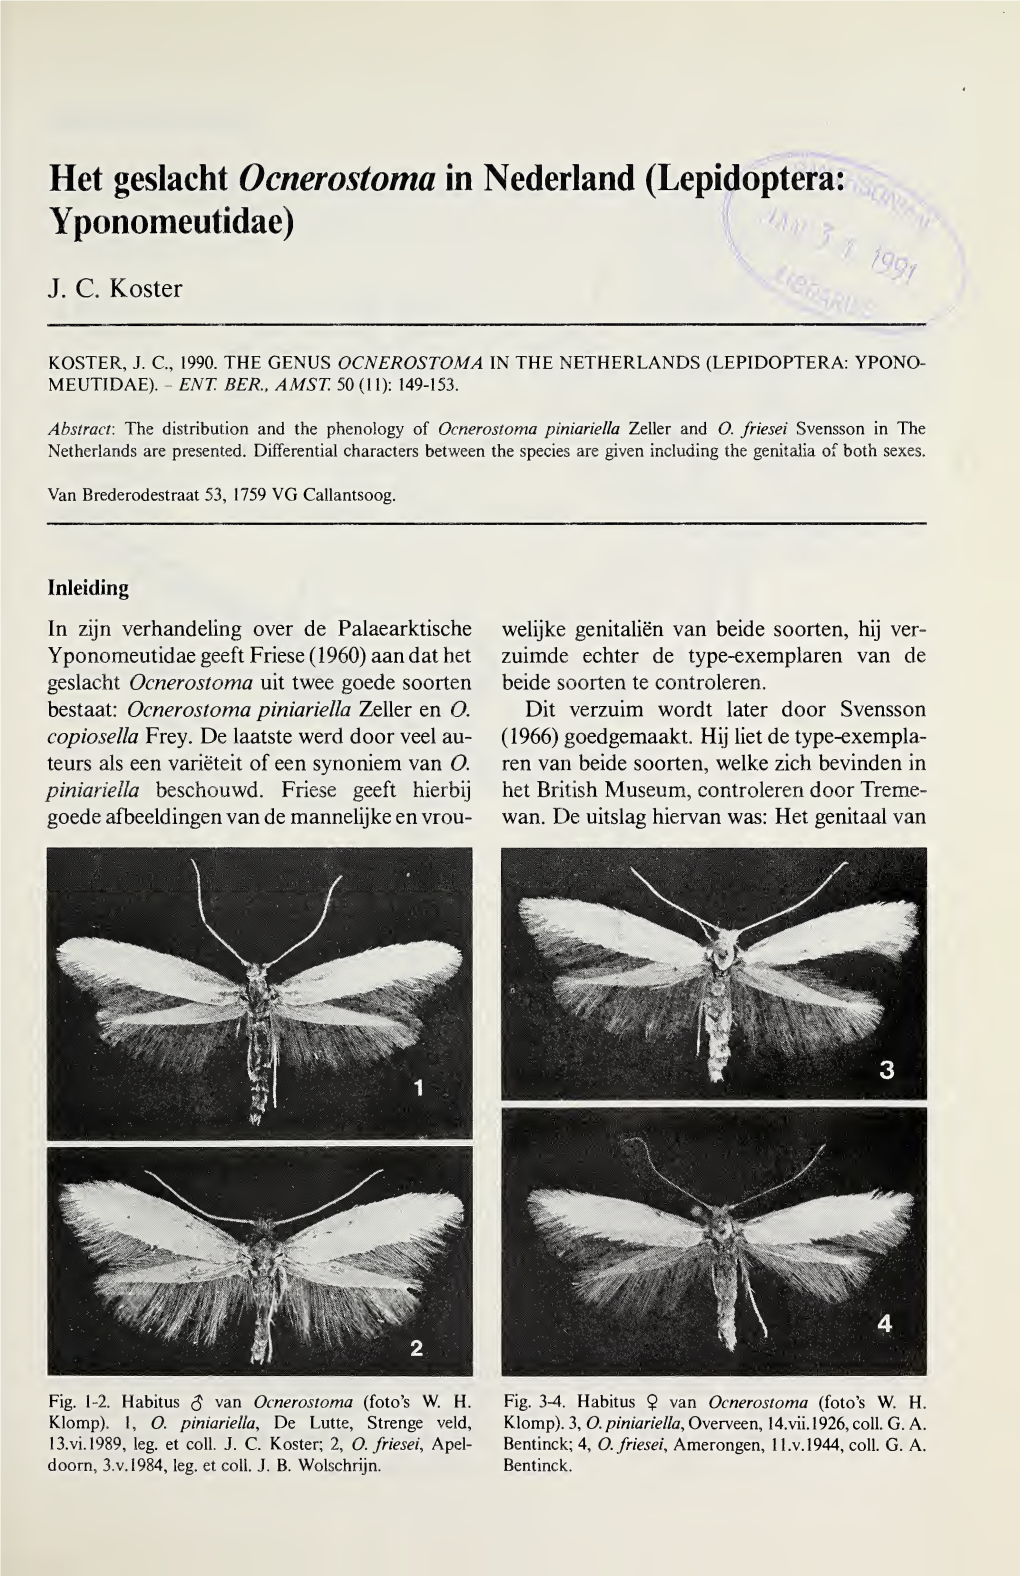 Lepidoptera: Yponomeutidae)